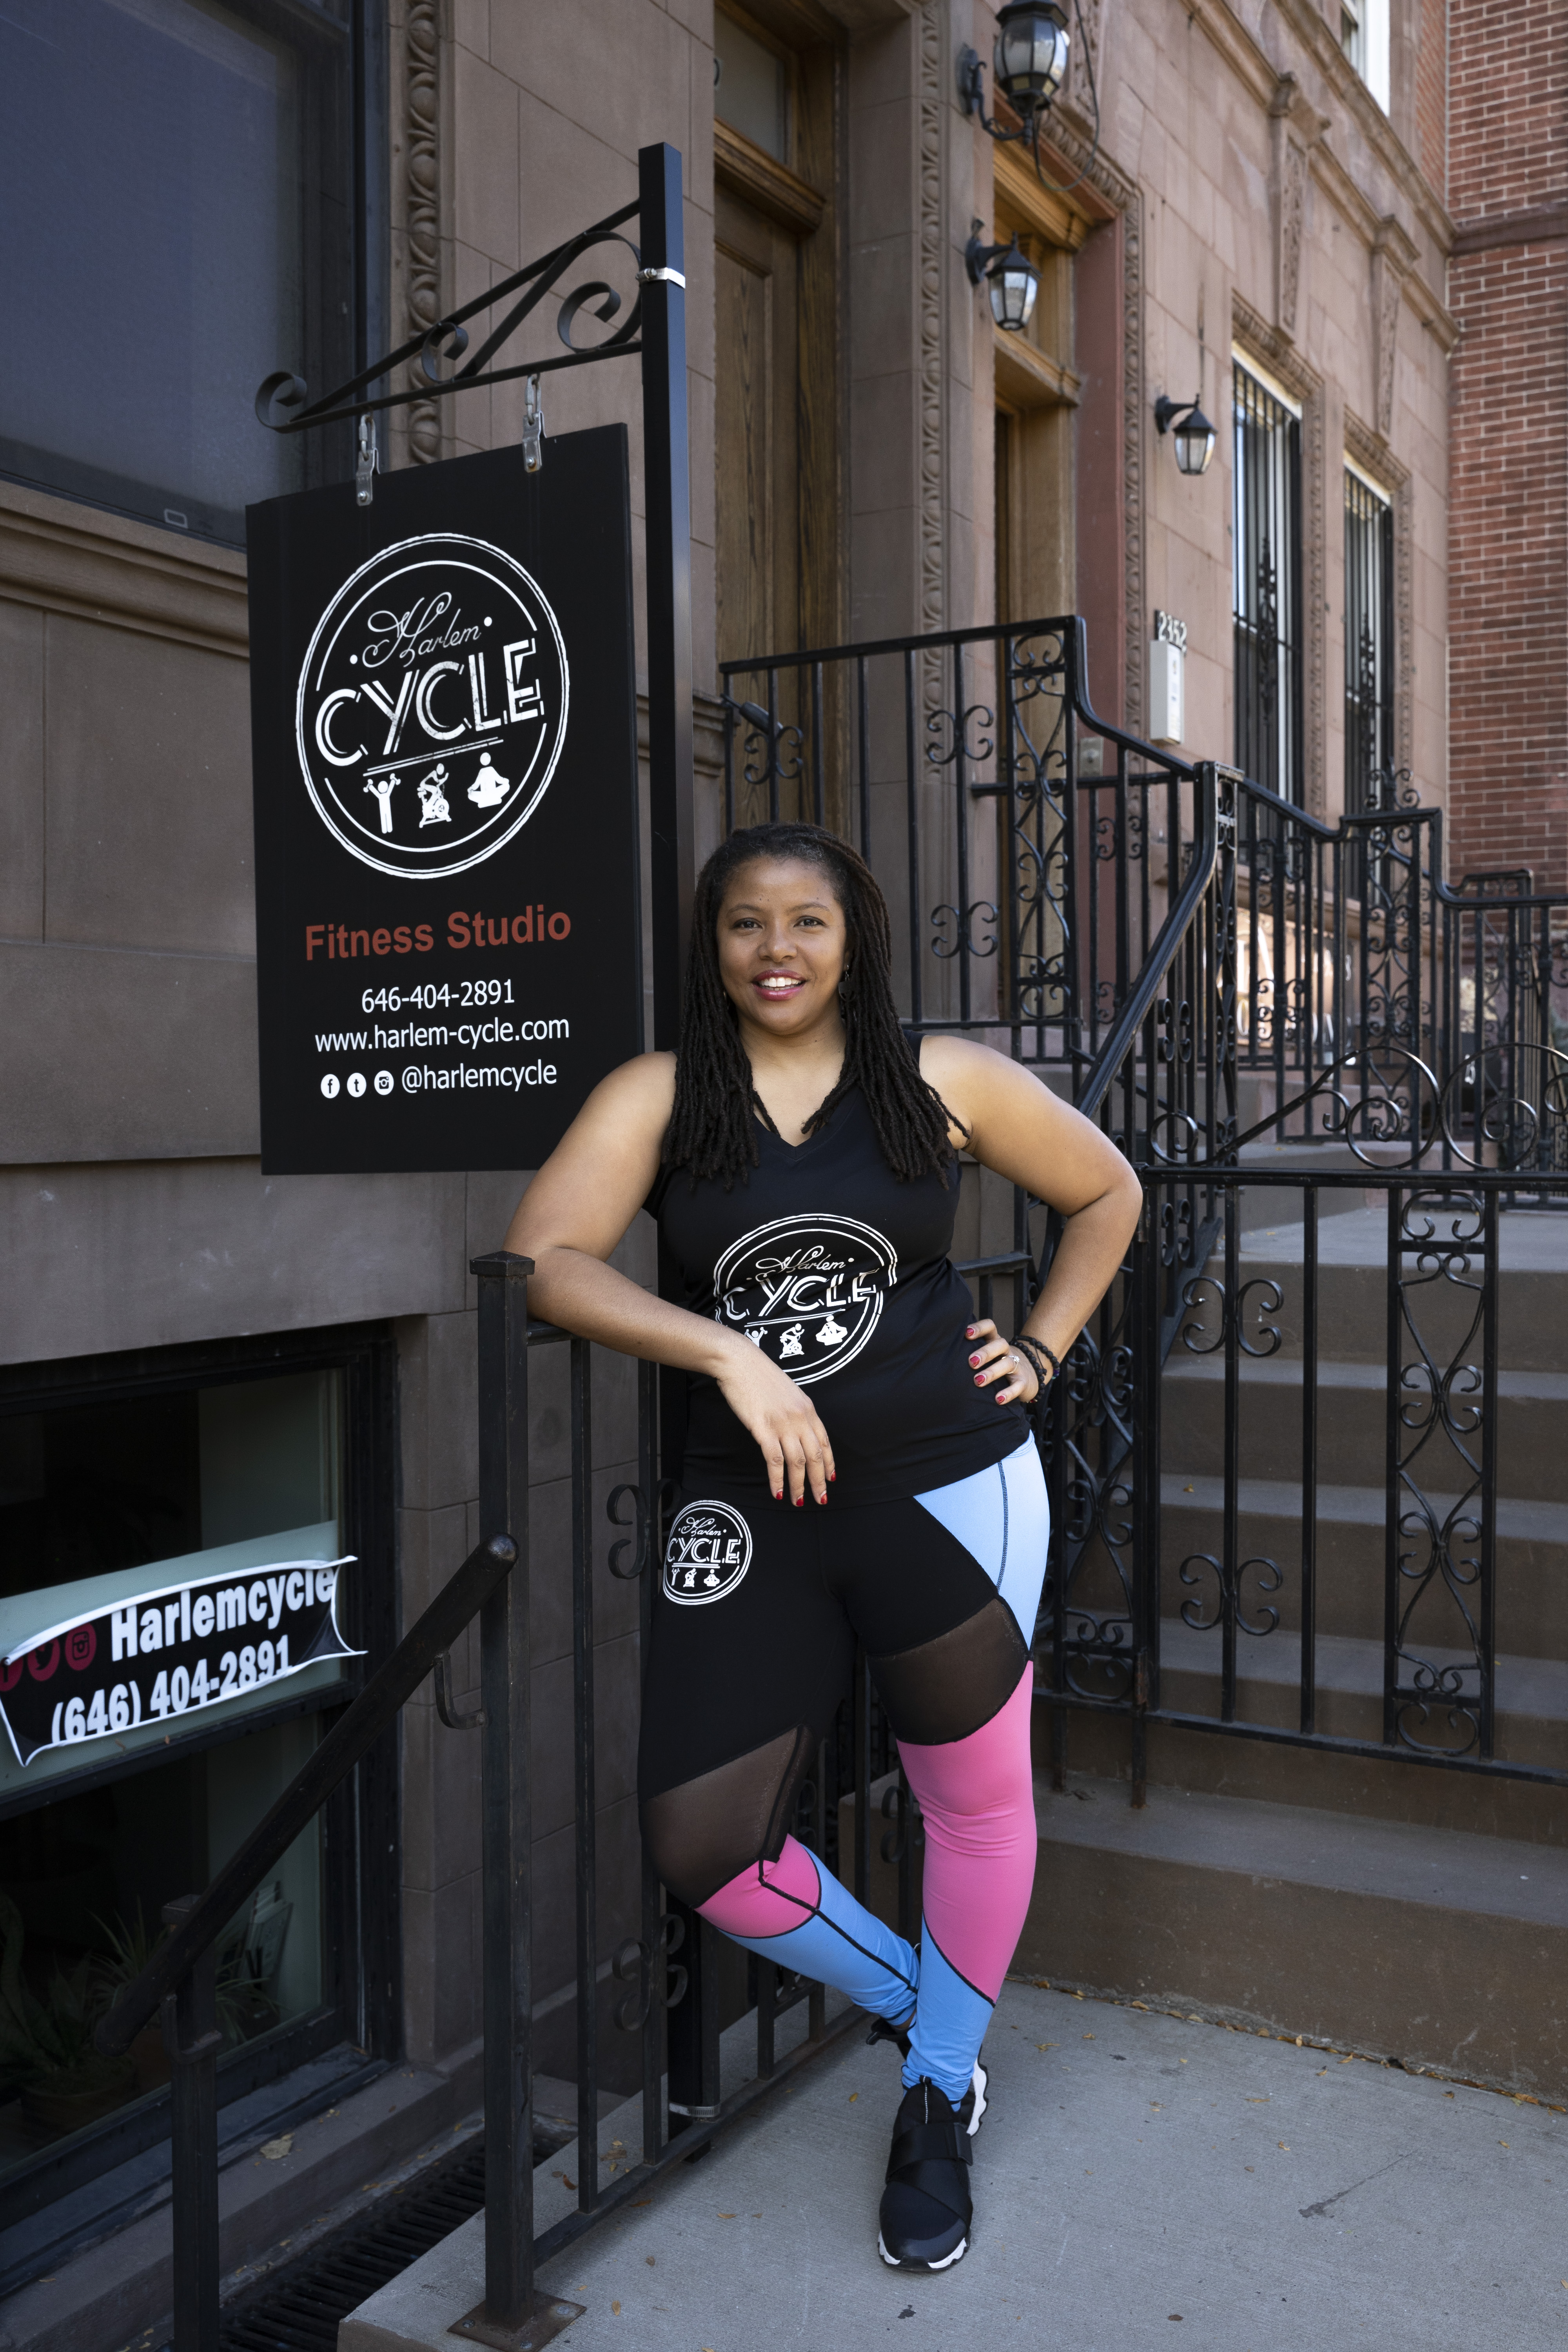 Harlem Cycle founder